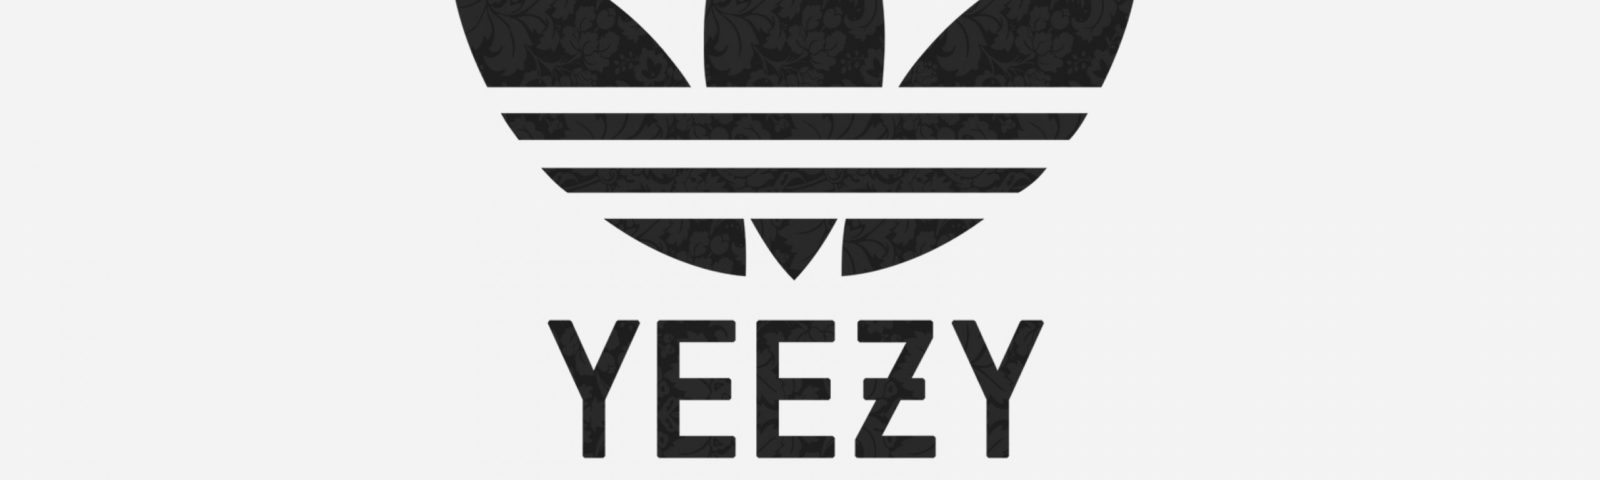 Adidas Yeezy Wallpaper softwaretutorcouk